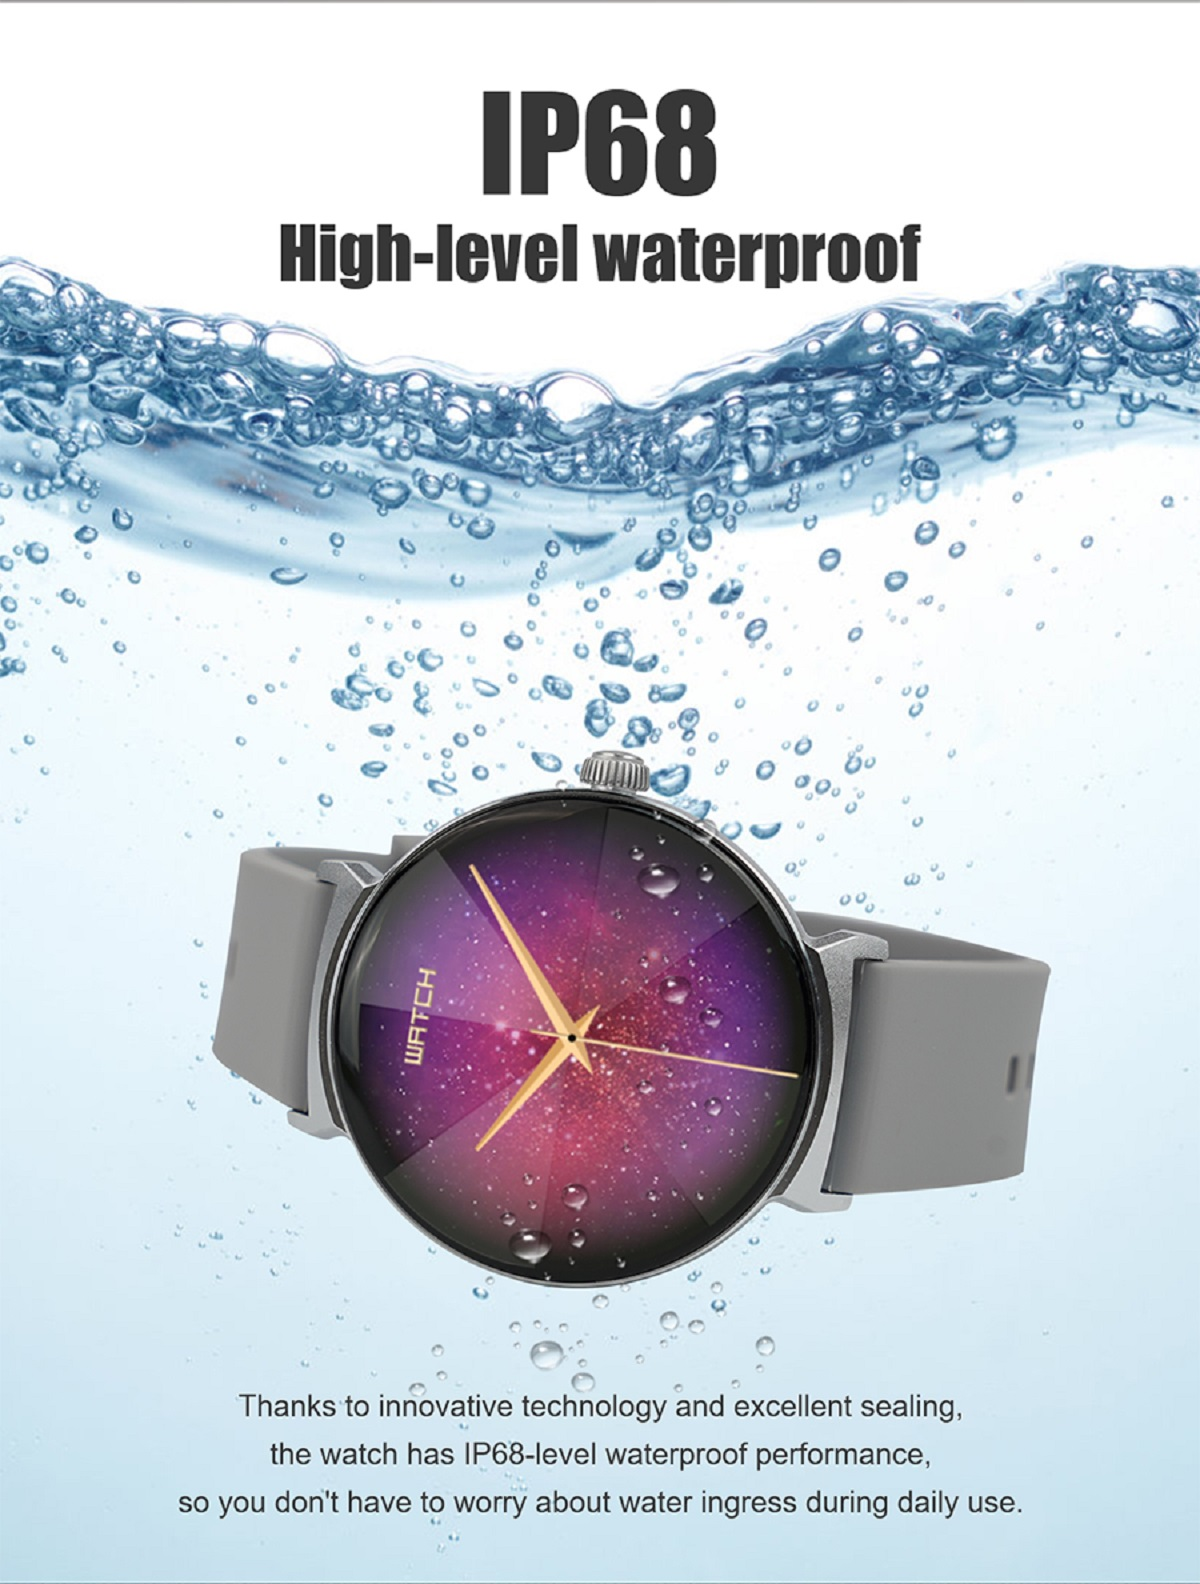 MIRUX DT4New GL BT-Anruf Fitness Smartwatch Tracker Pink Silikon/Metall